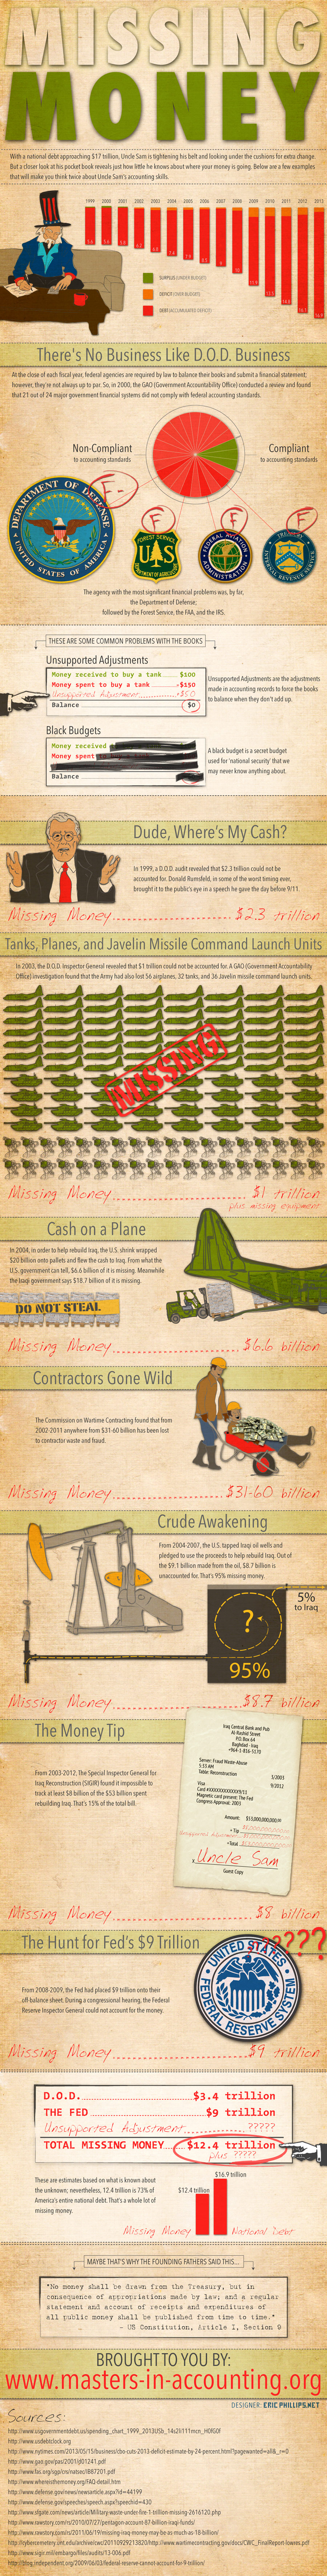 Missing Money Infographic